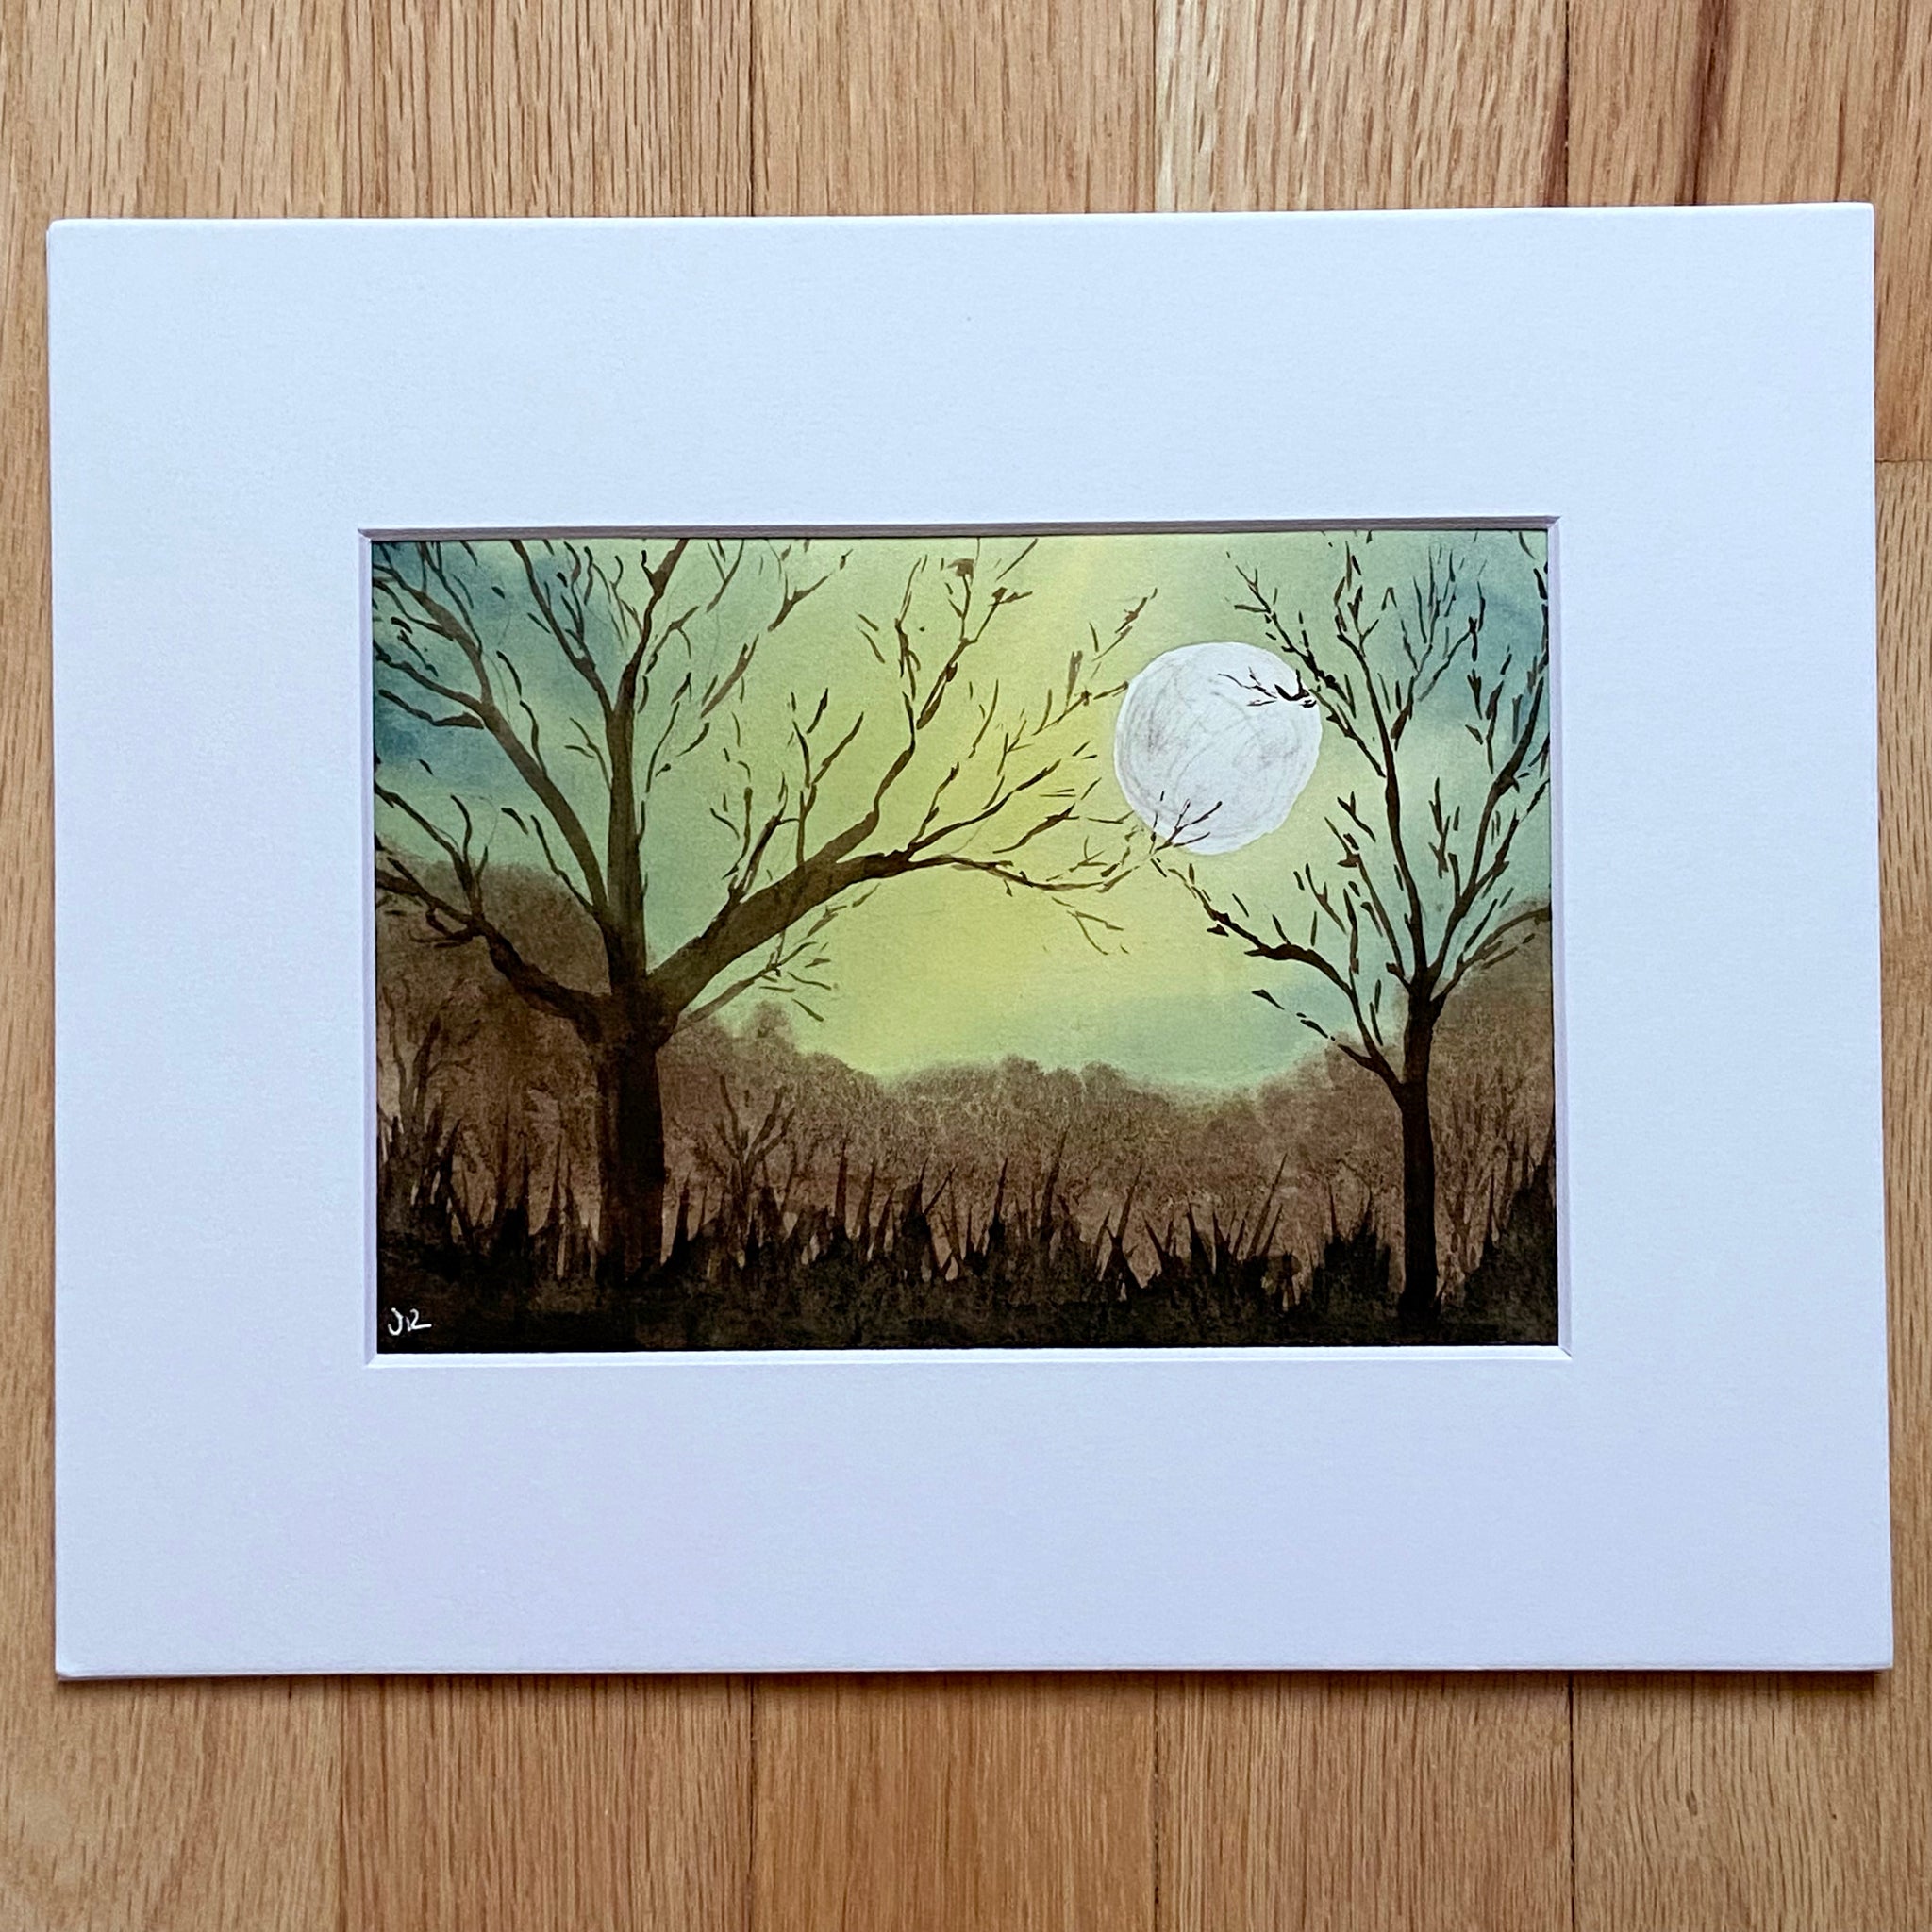 Spooky Trees